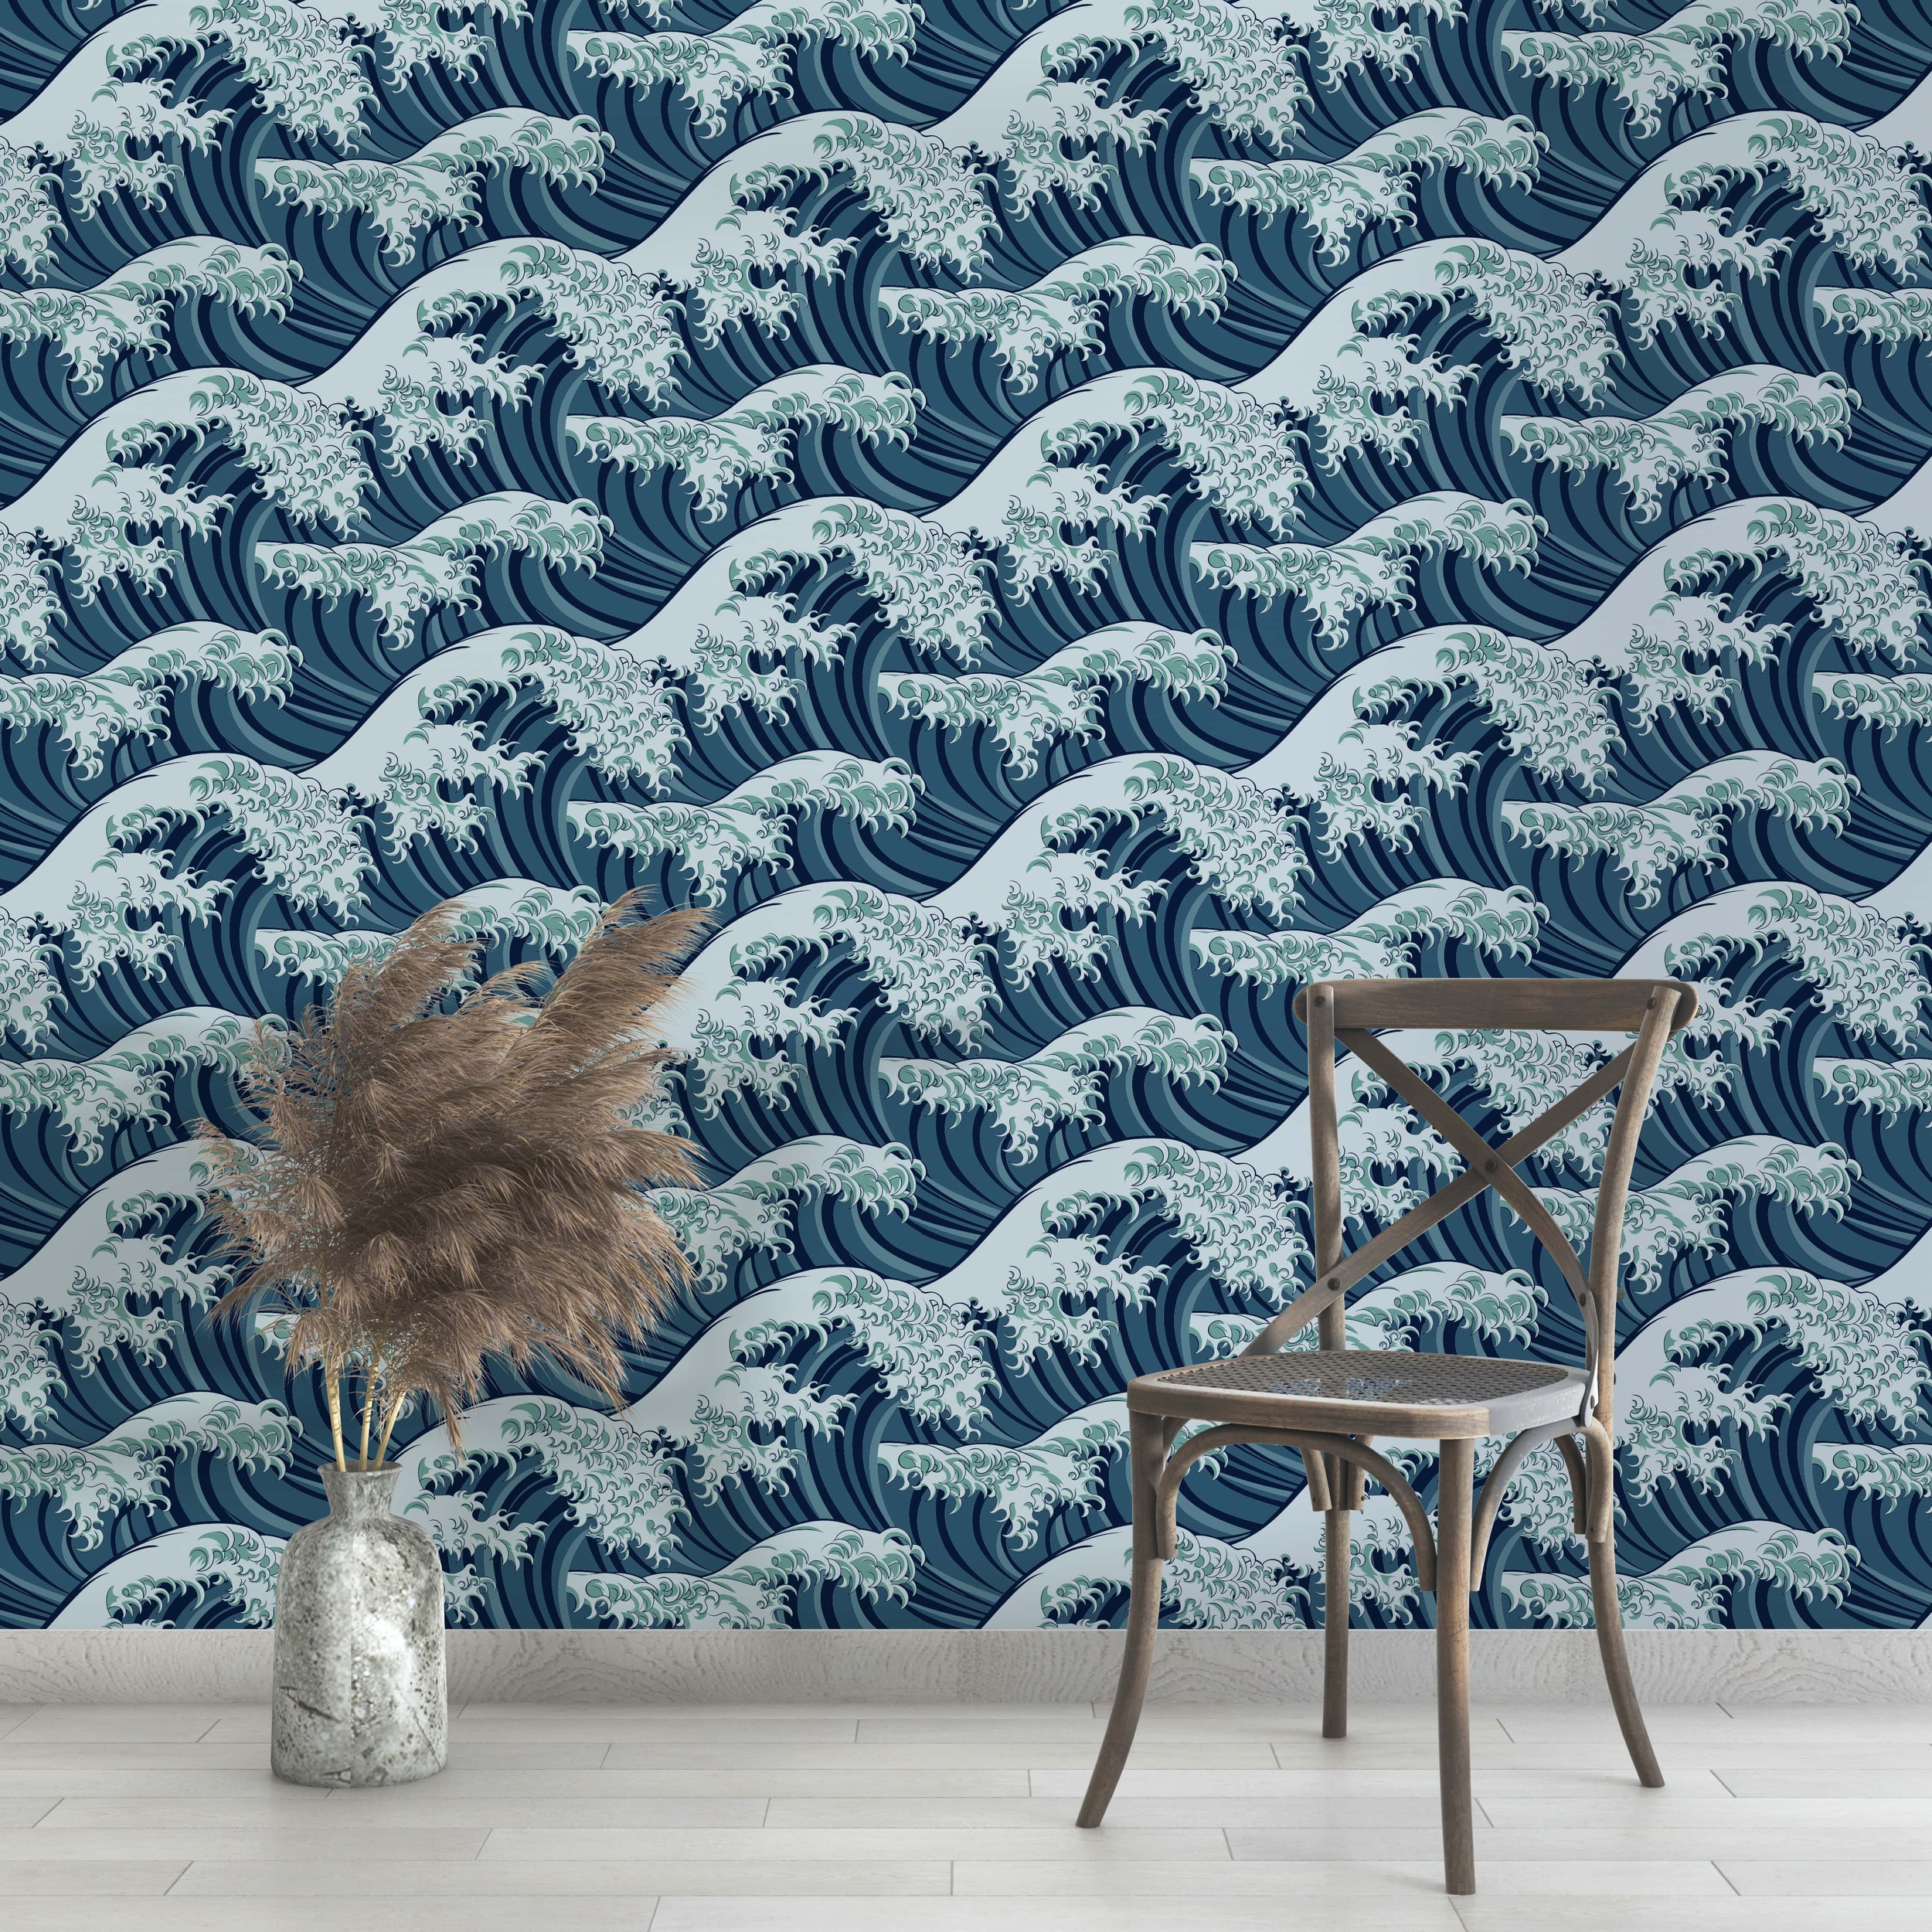 PP34-papier-peint-adhesif-decoratif-revetement-vinyle-motifs-la-vague-kanagawa-hokusai-renovation-meuble-mur-2